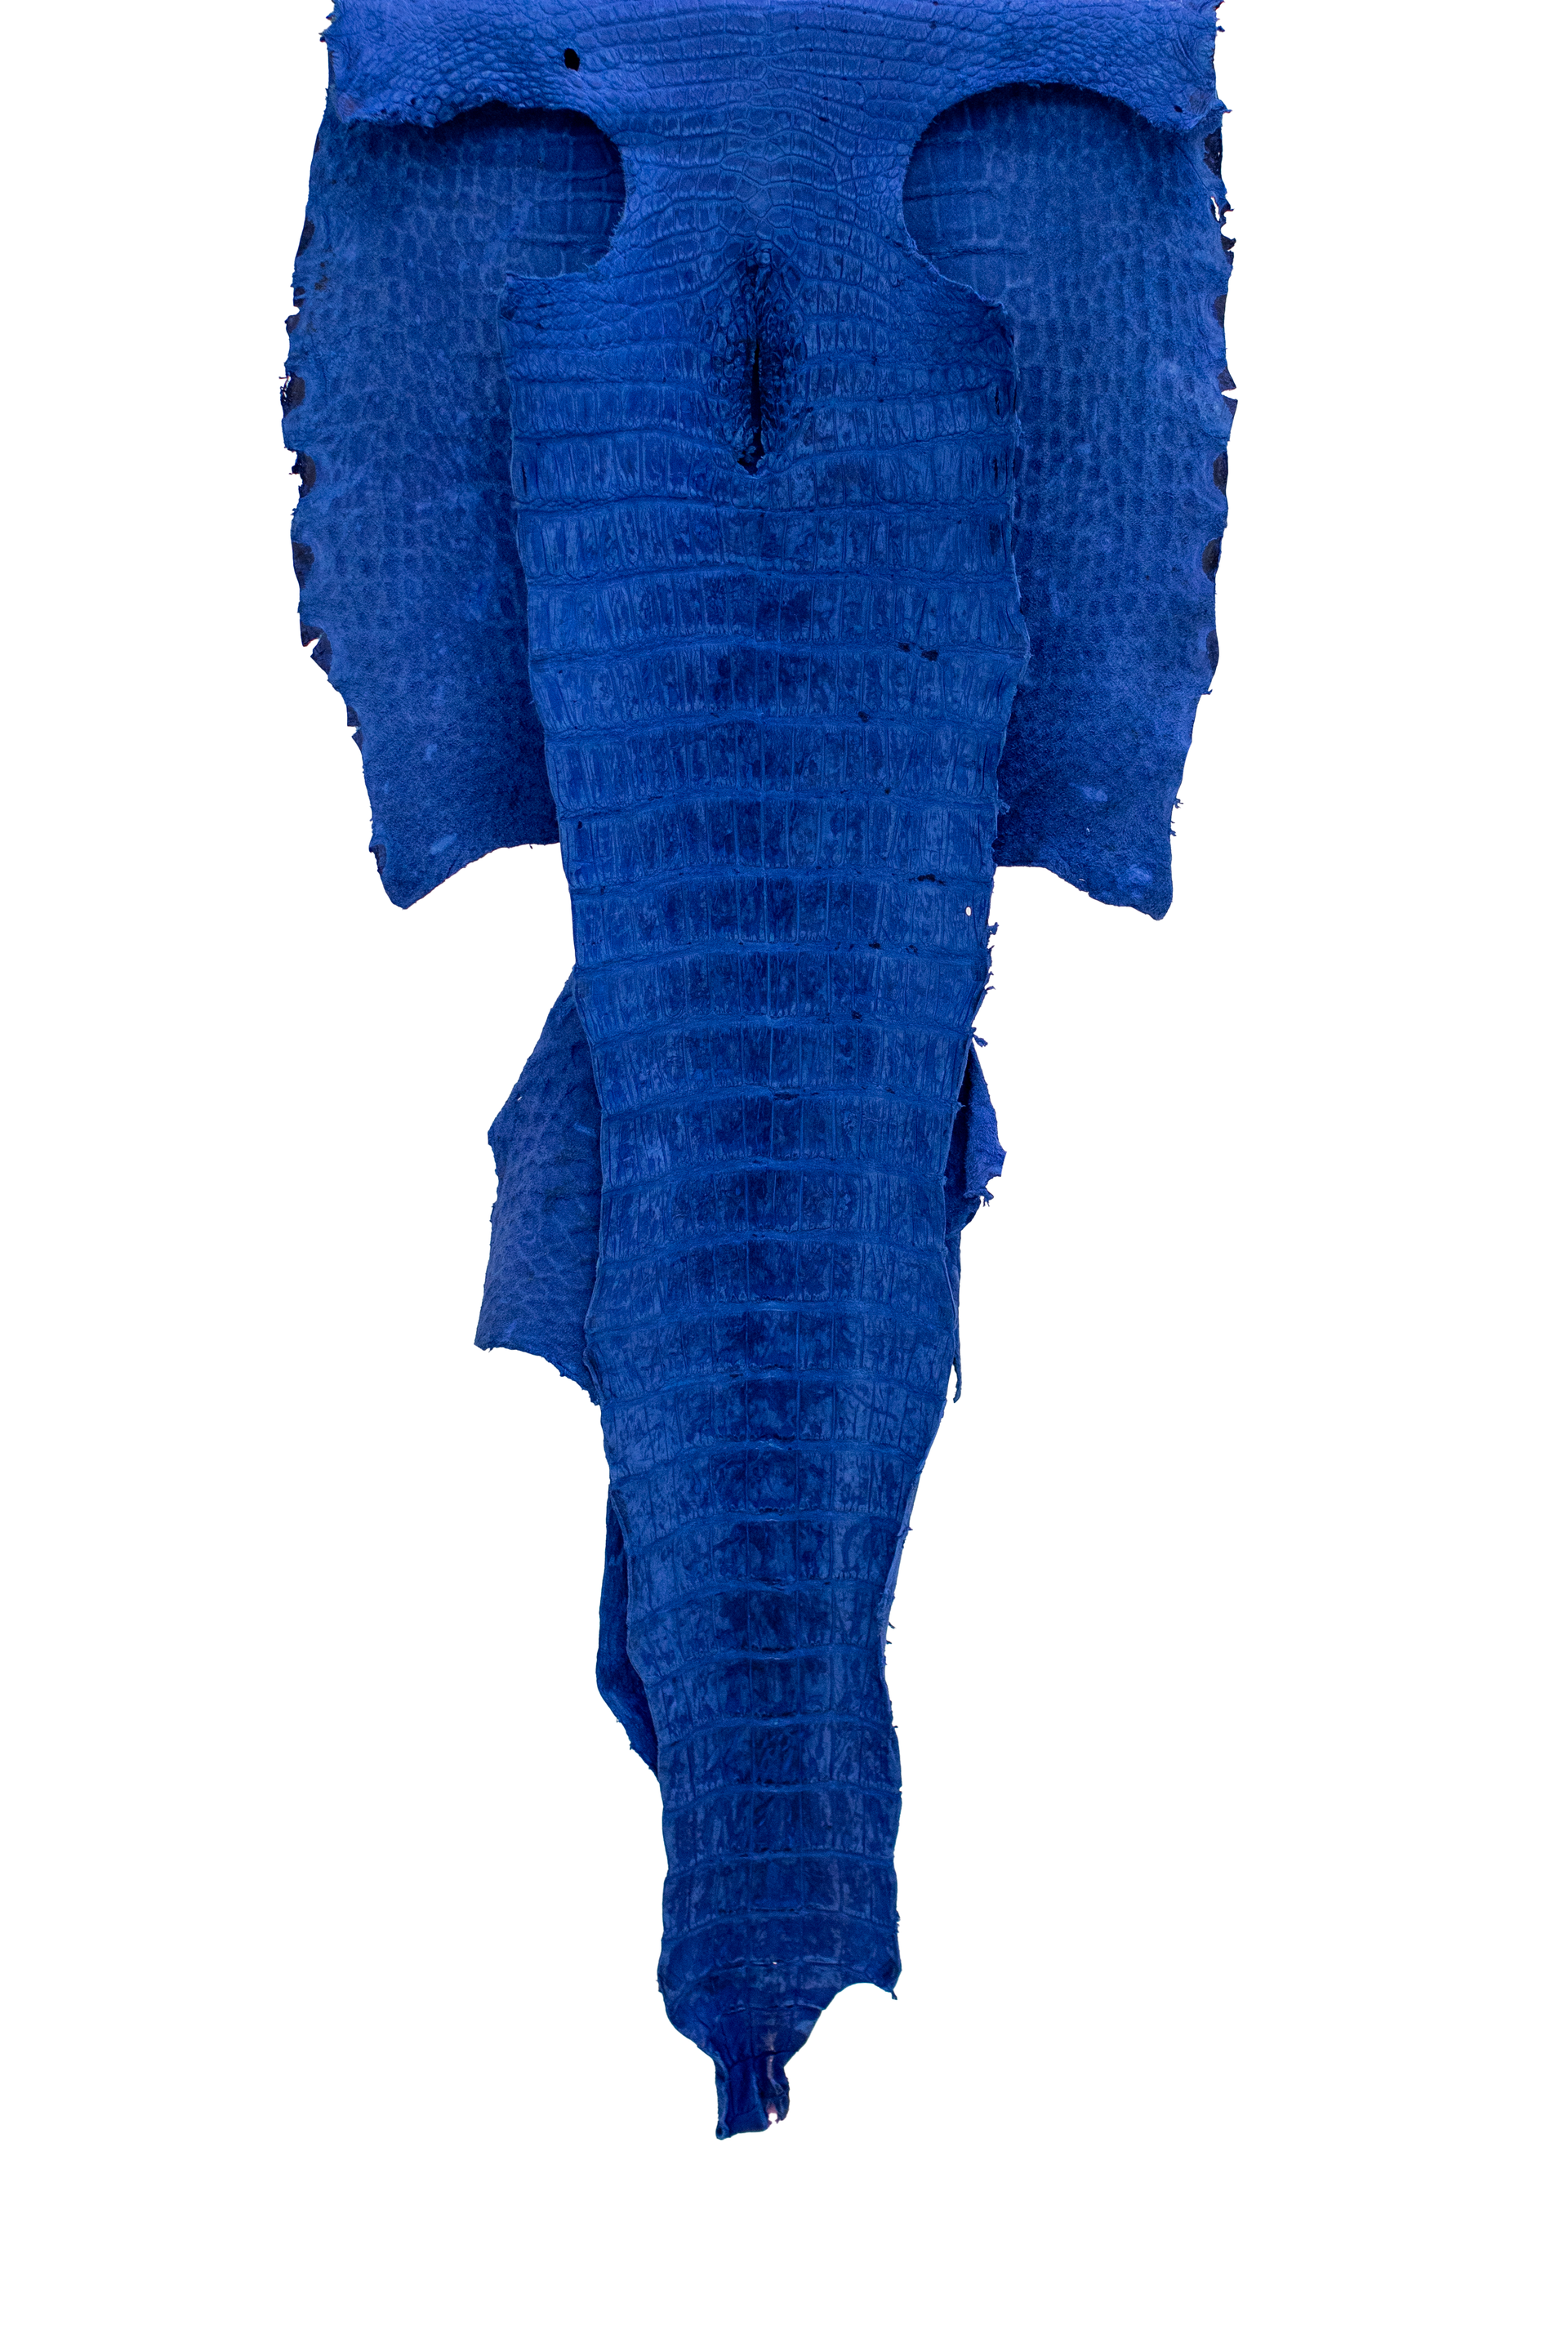 60 cm Grade 3/4 Navy Blue Nubuck Wild American Alligator Leather - Tag: FL21-0053091